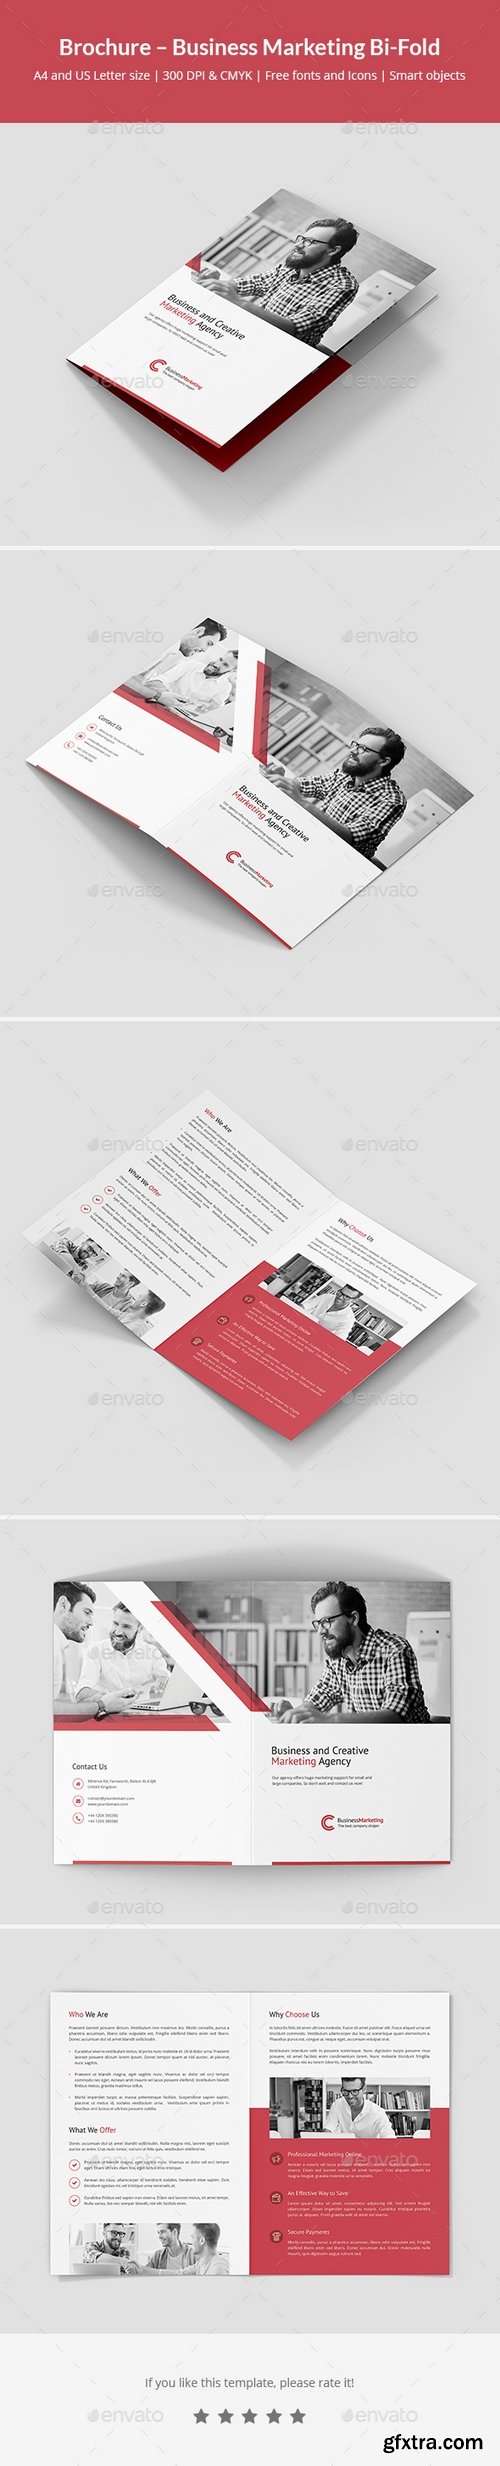 Graphicriver - Brochure – Business Marketing Bi-Fold 21406903